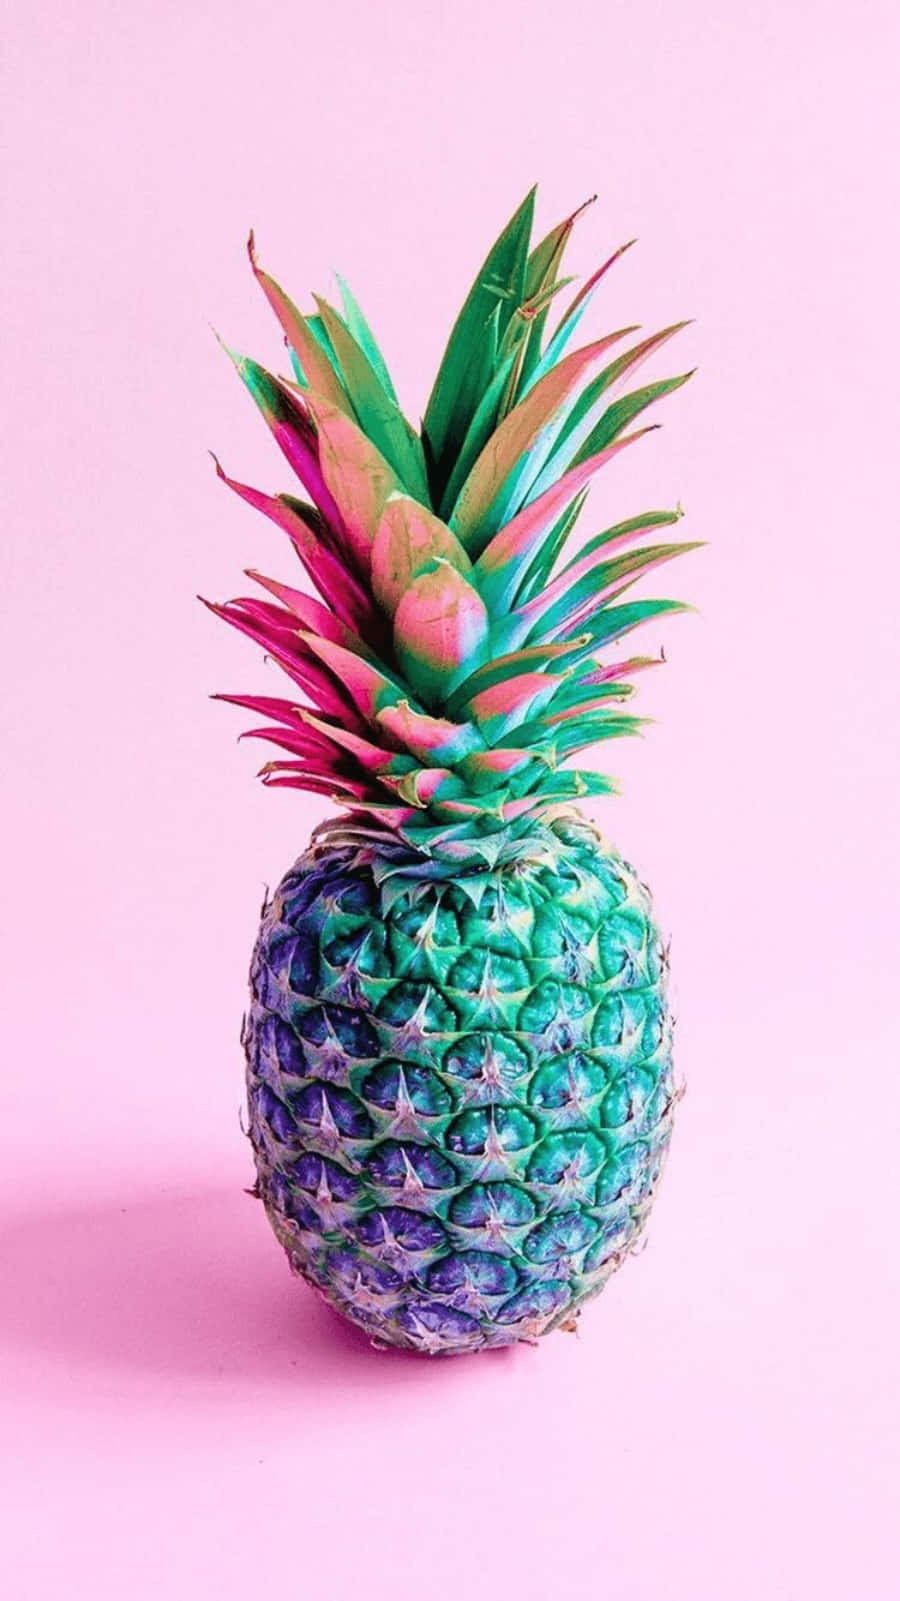 Appreciate the beauty of a ripe pineapple.